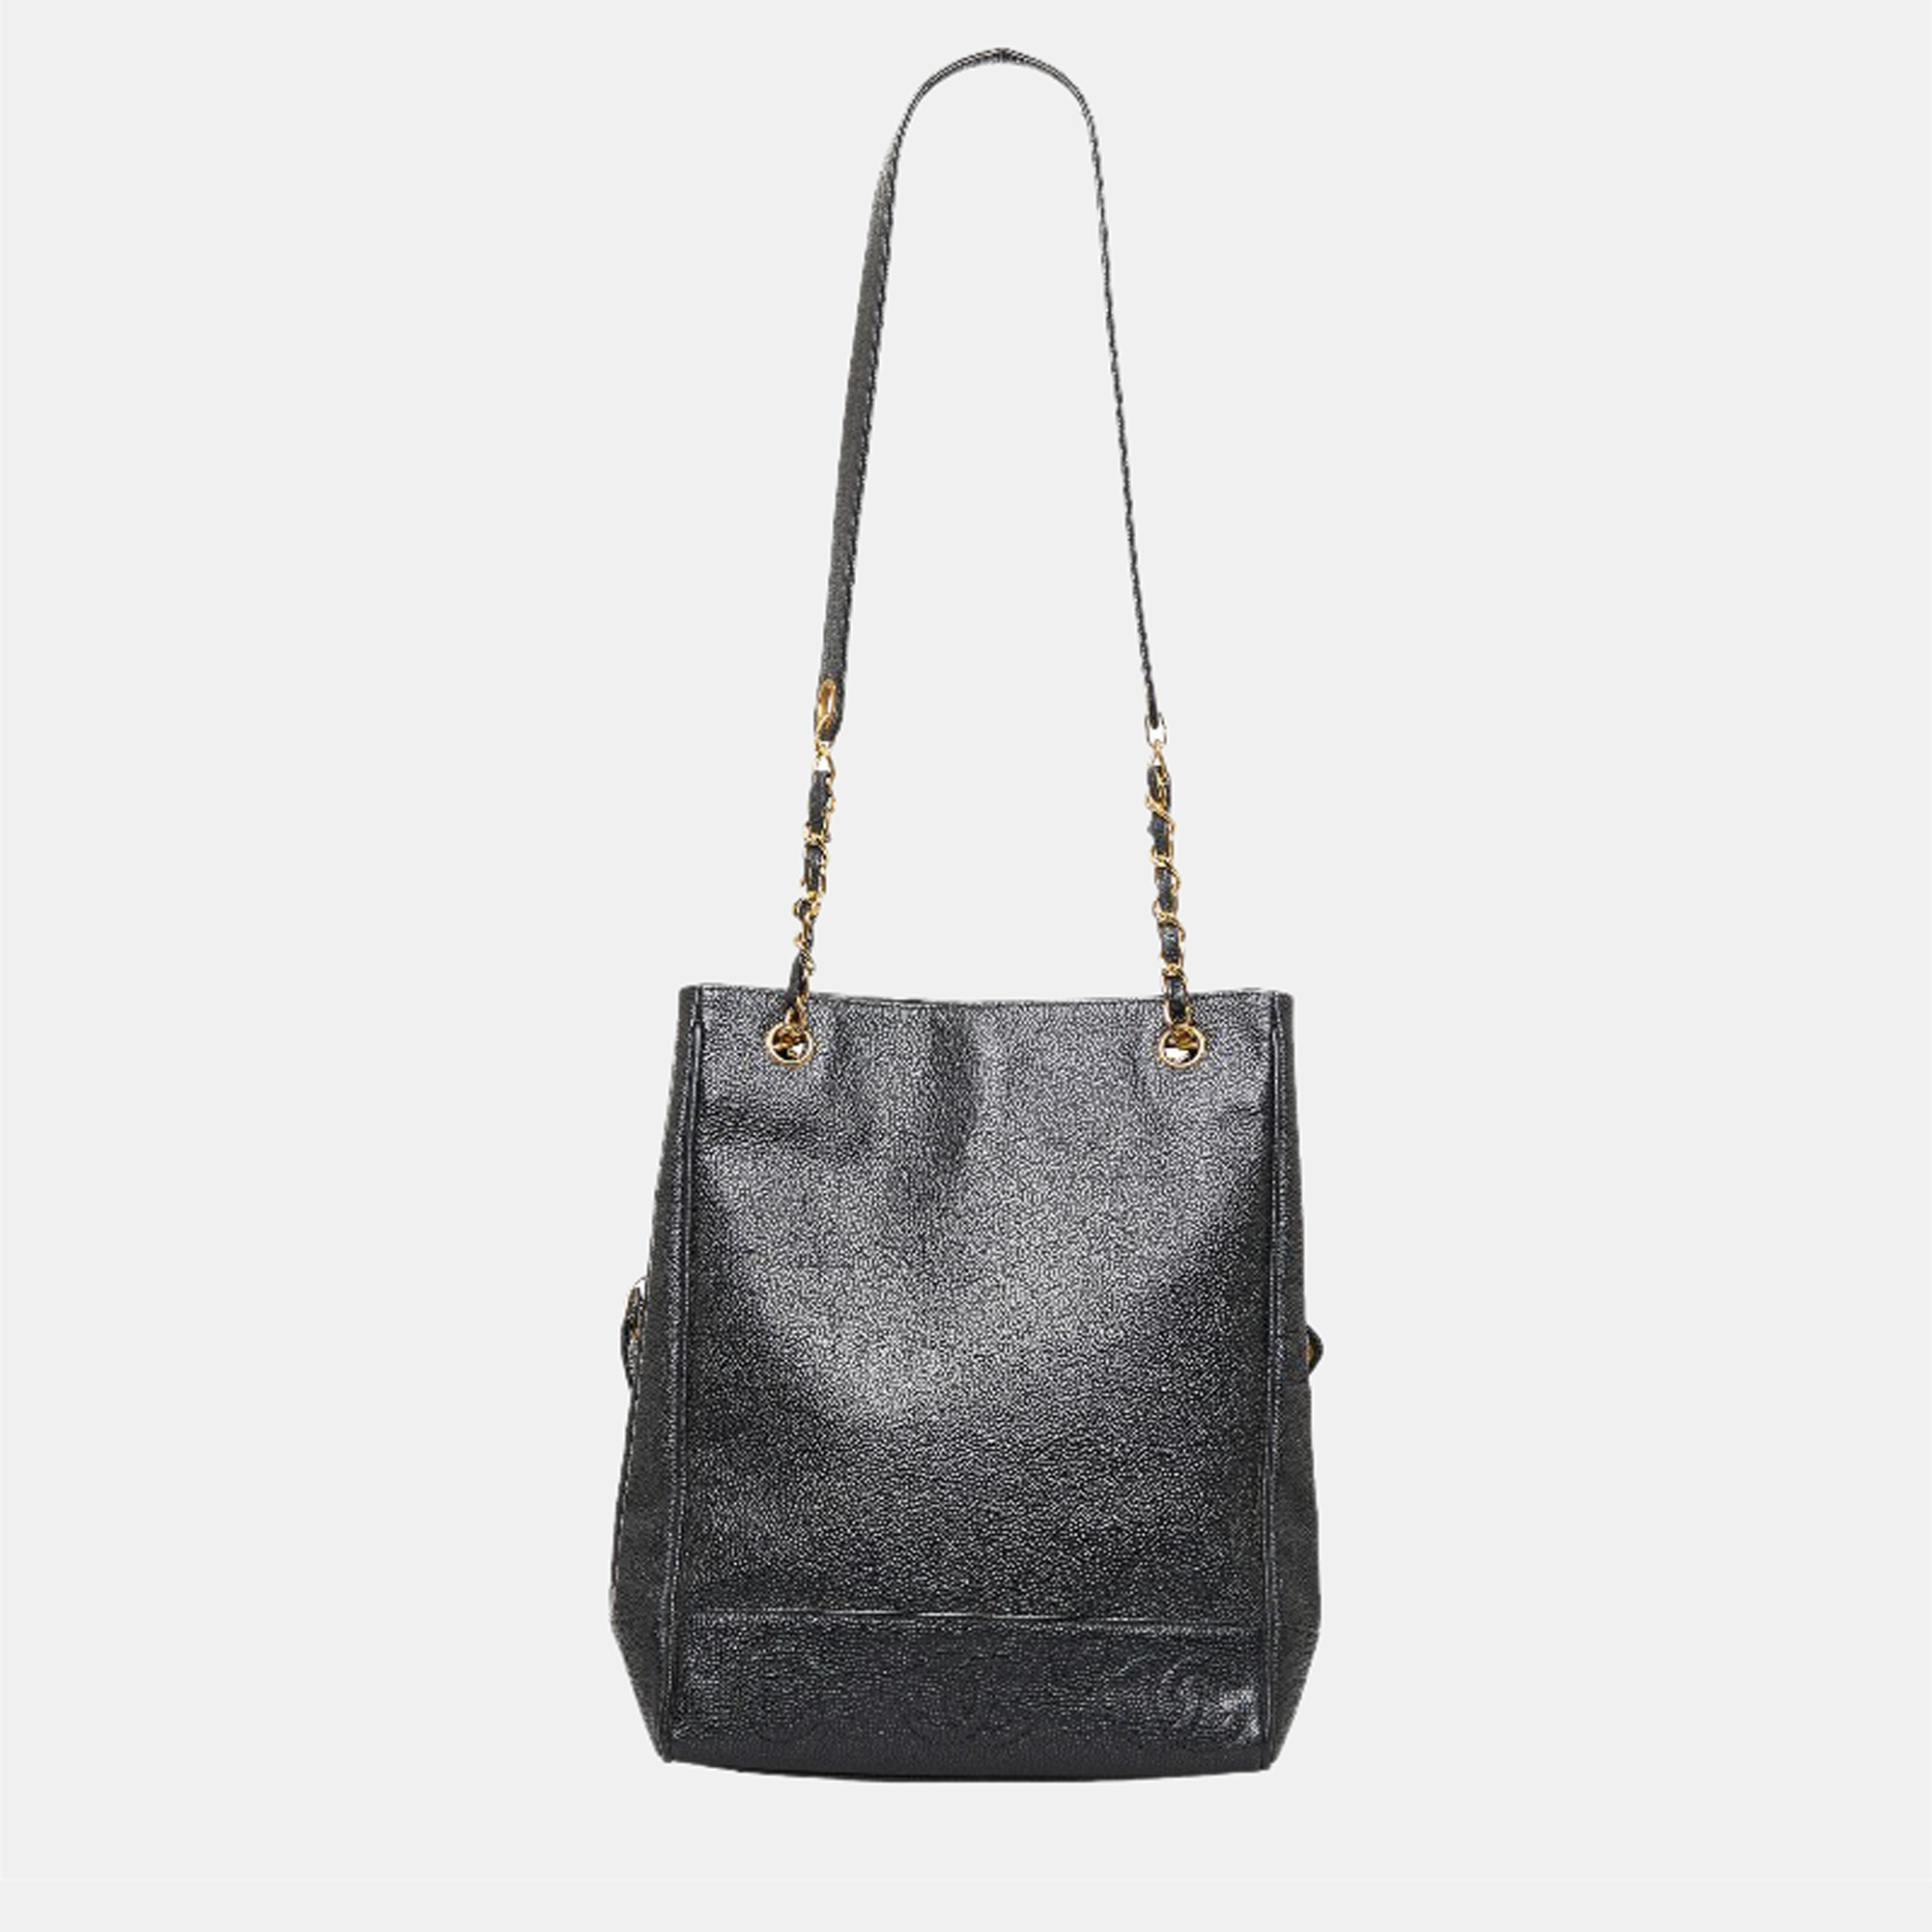 Chanel Black Caviar Leather Triple CC Tote Bag